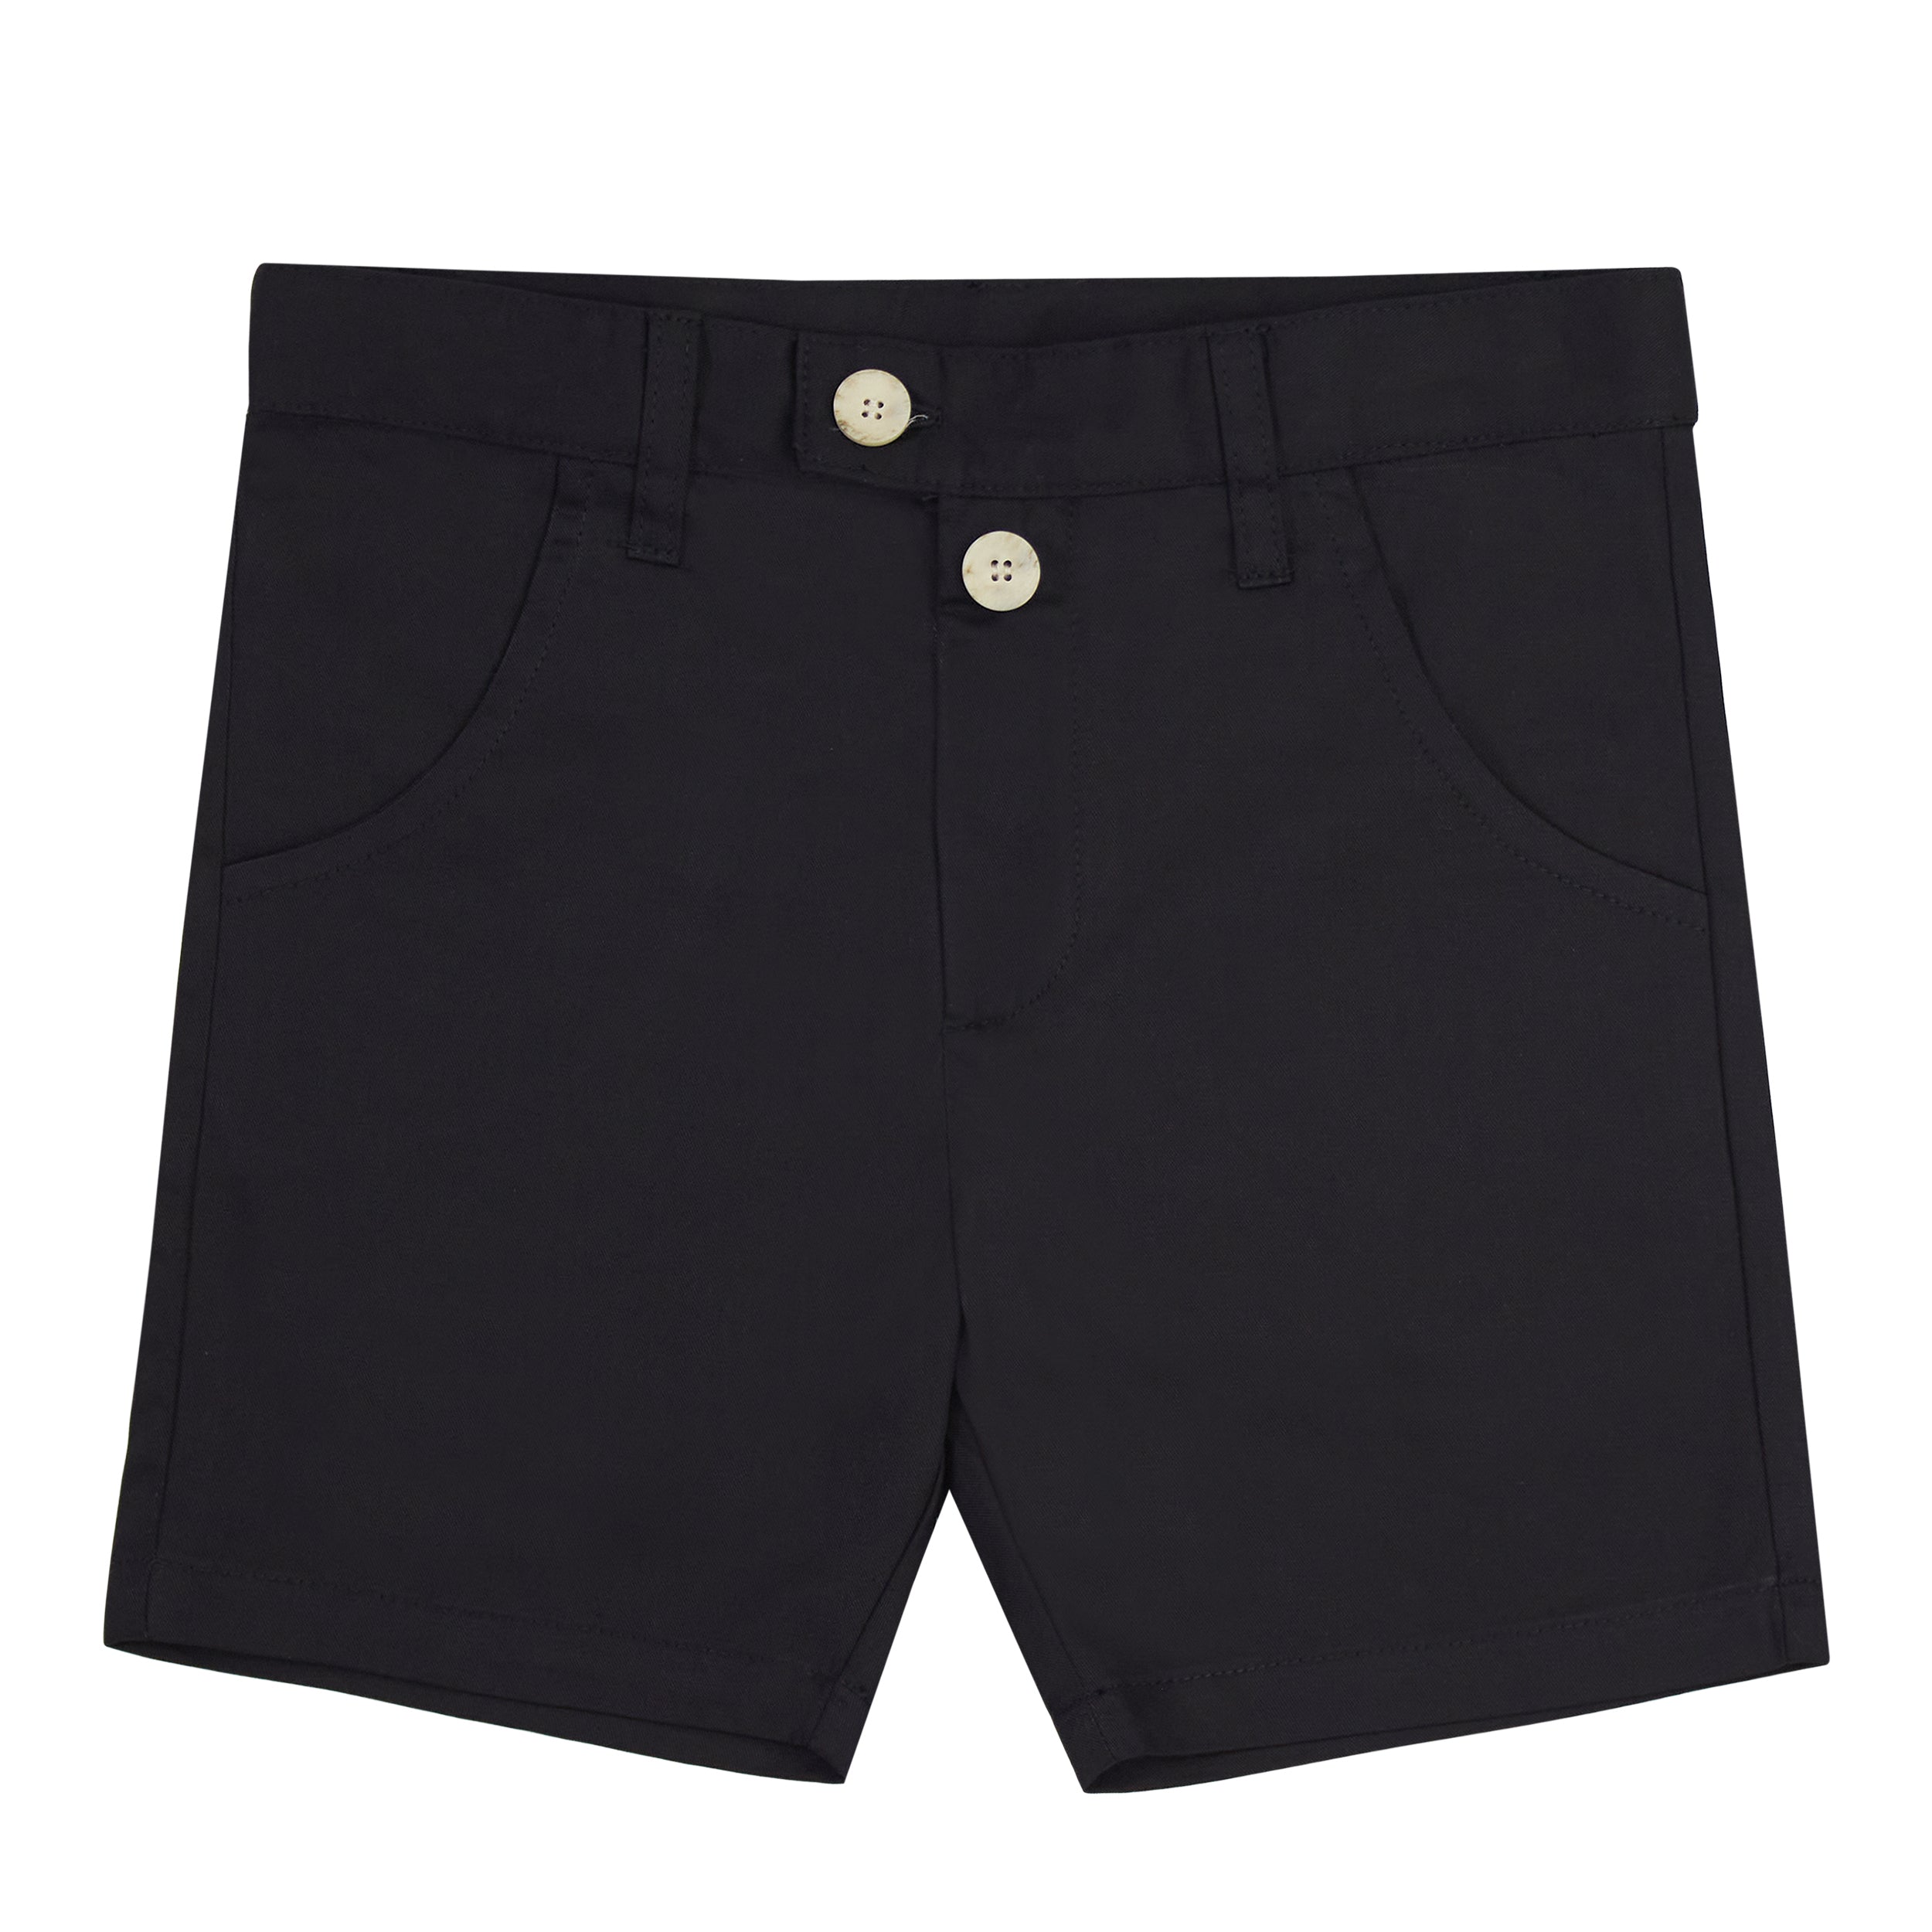 Crew Kids Cotton Shorts - Black